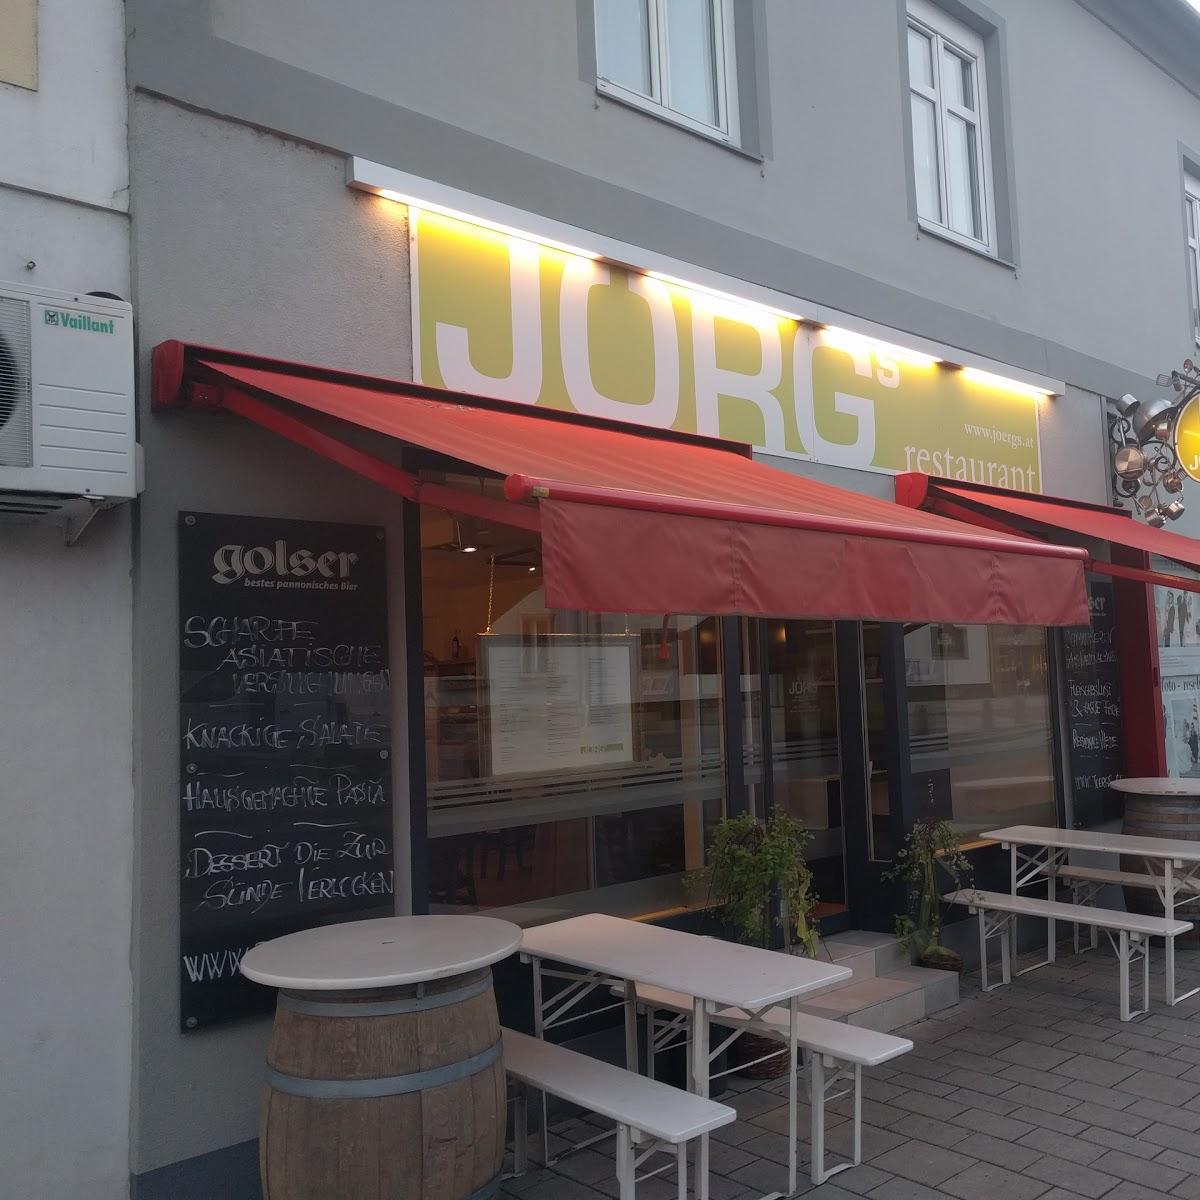 Restaurant "JÖRGs Restaurant" in Neusiedl am See